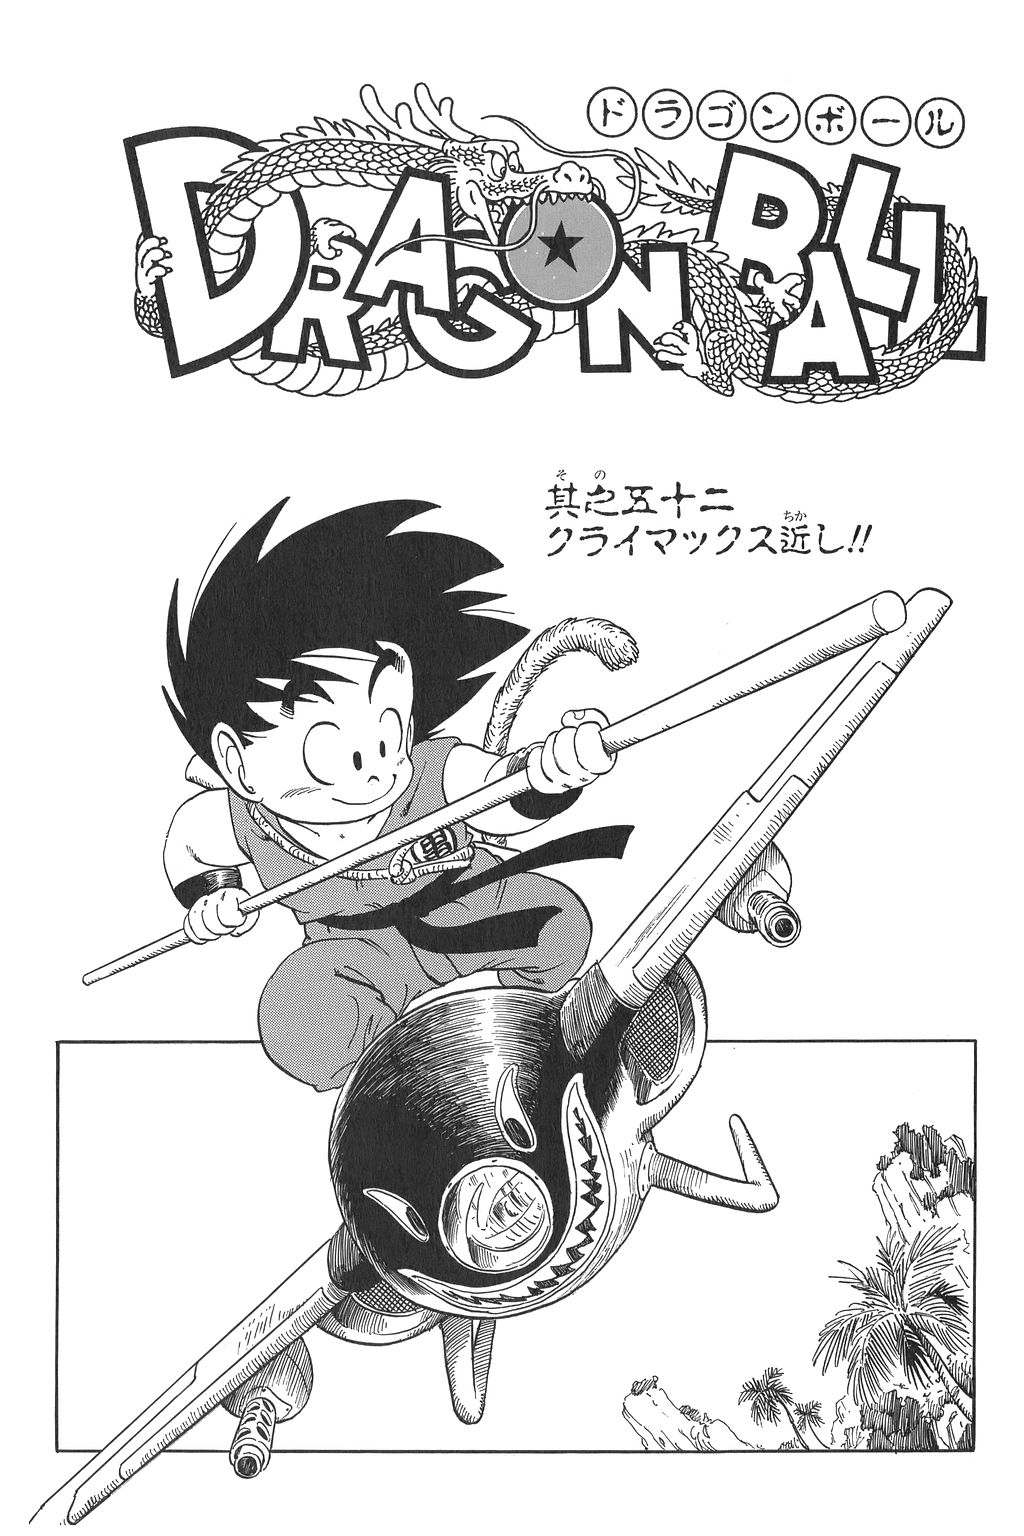 Gaul  Dragon Ball Land 悟 ---COMISSIONS OPEN--- on X: Página do manga 73  de DBS colorida por mim. @kamisamaexp Lineart feita por @KaiquiOAlien #goku  #dragonballz #dragonball #dragonballsuper #dragonballsupermanga #granolah  #saiyajin #supersaiyanblue #